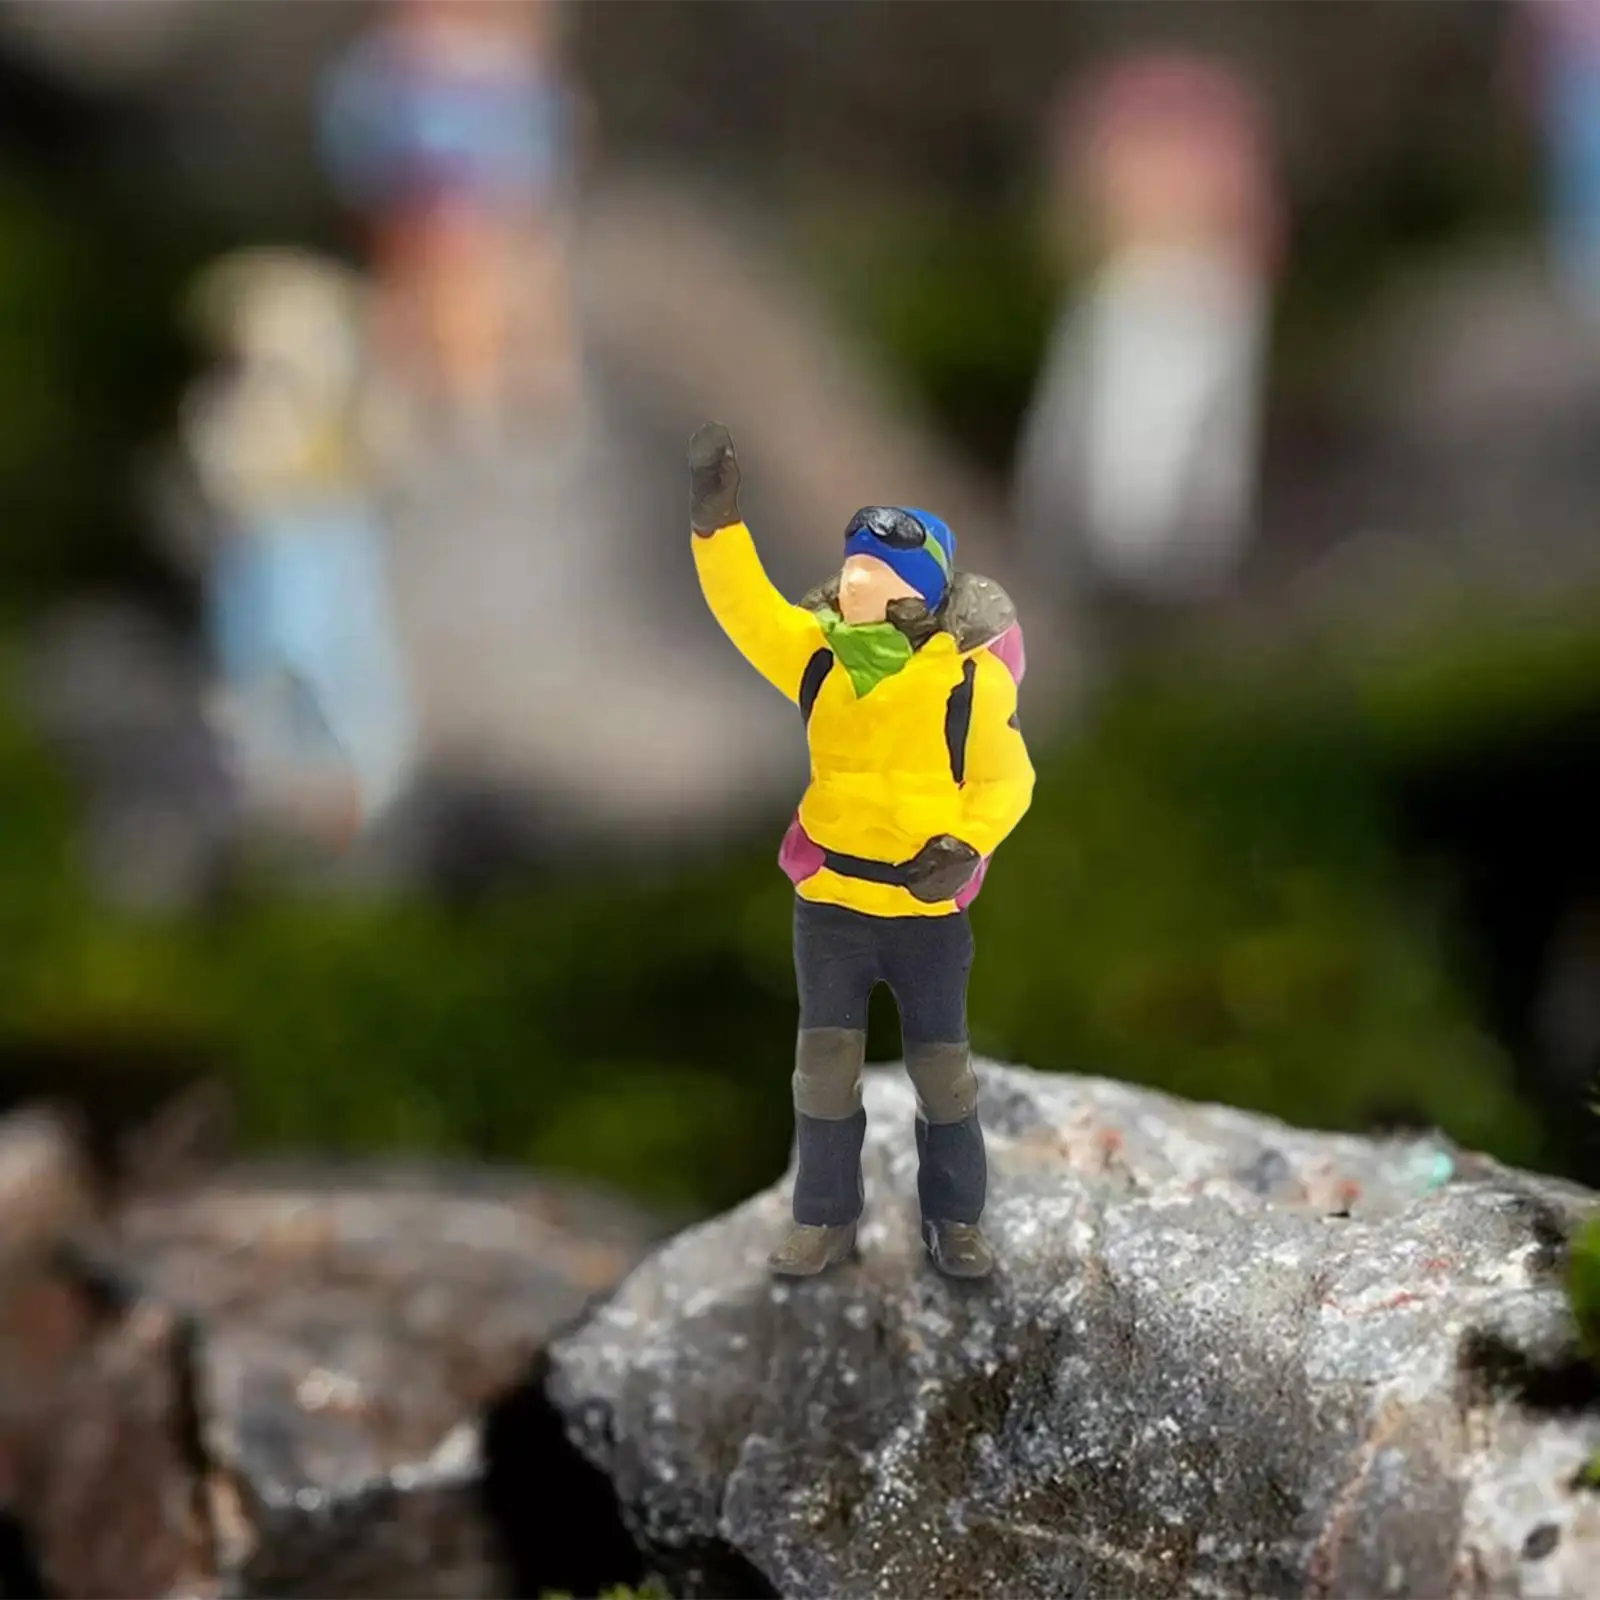 Realistic 1/64 Climbing People Figurines for Miniature Scene Layout Decor